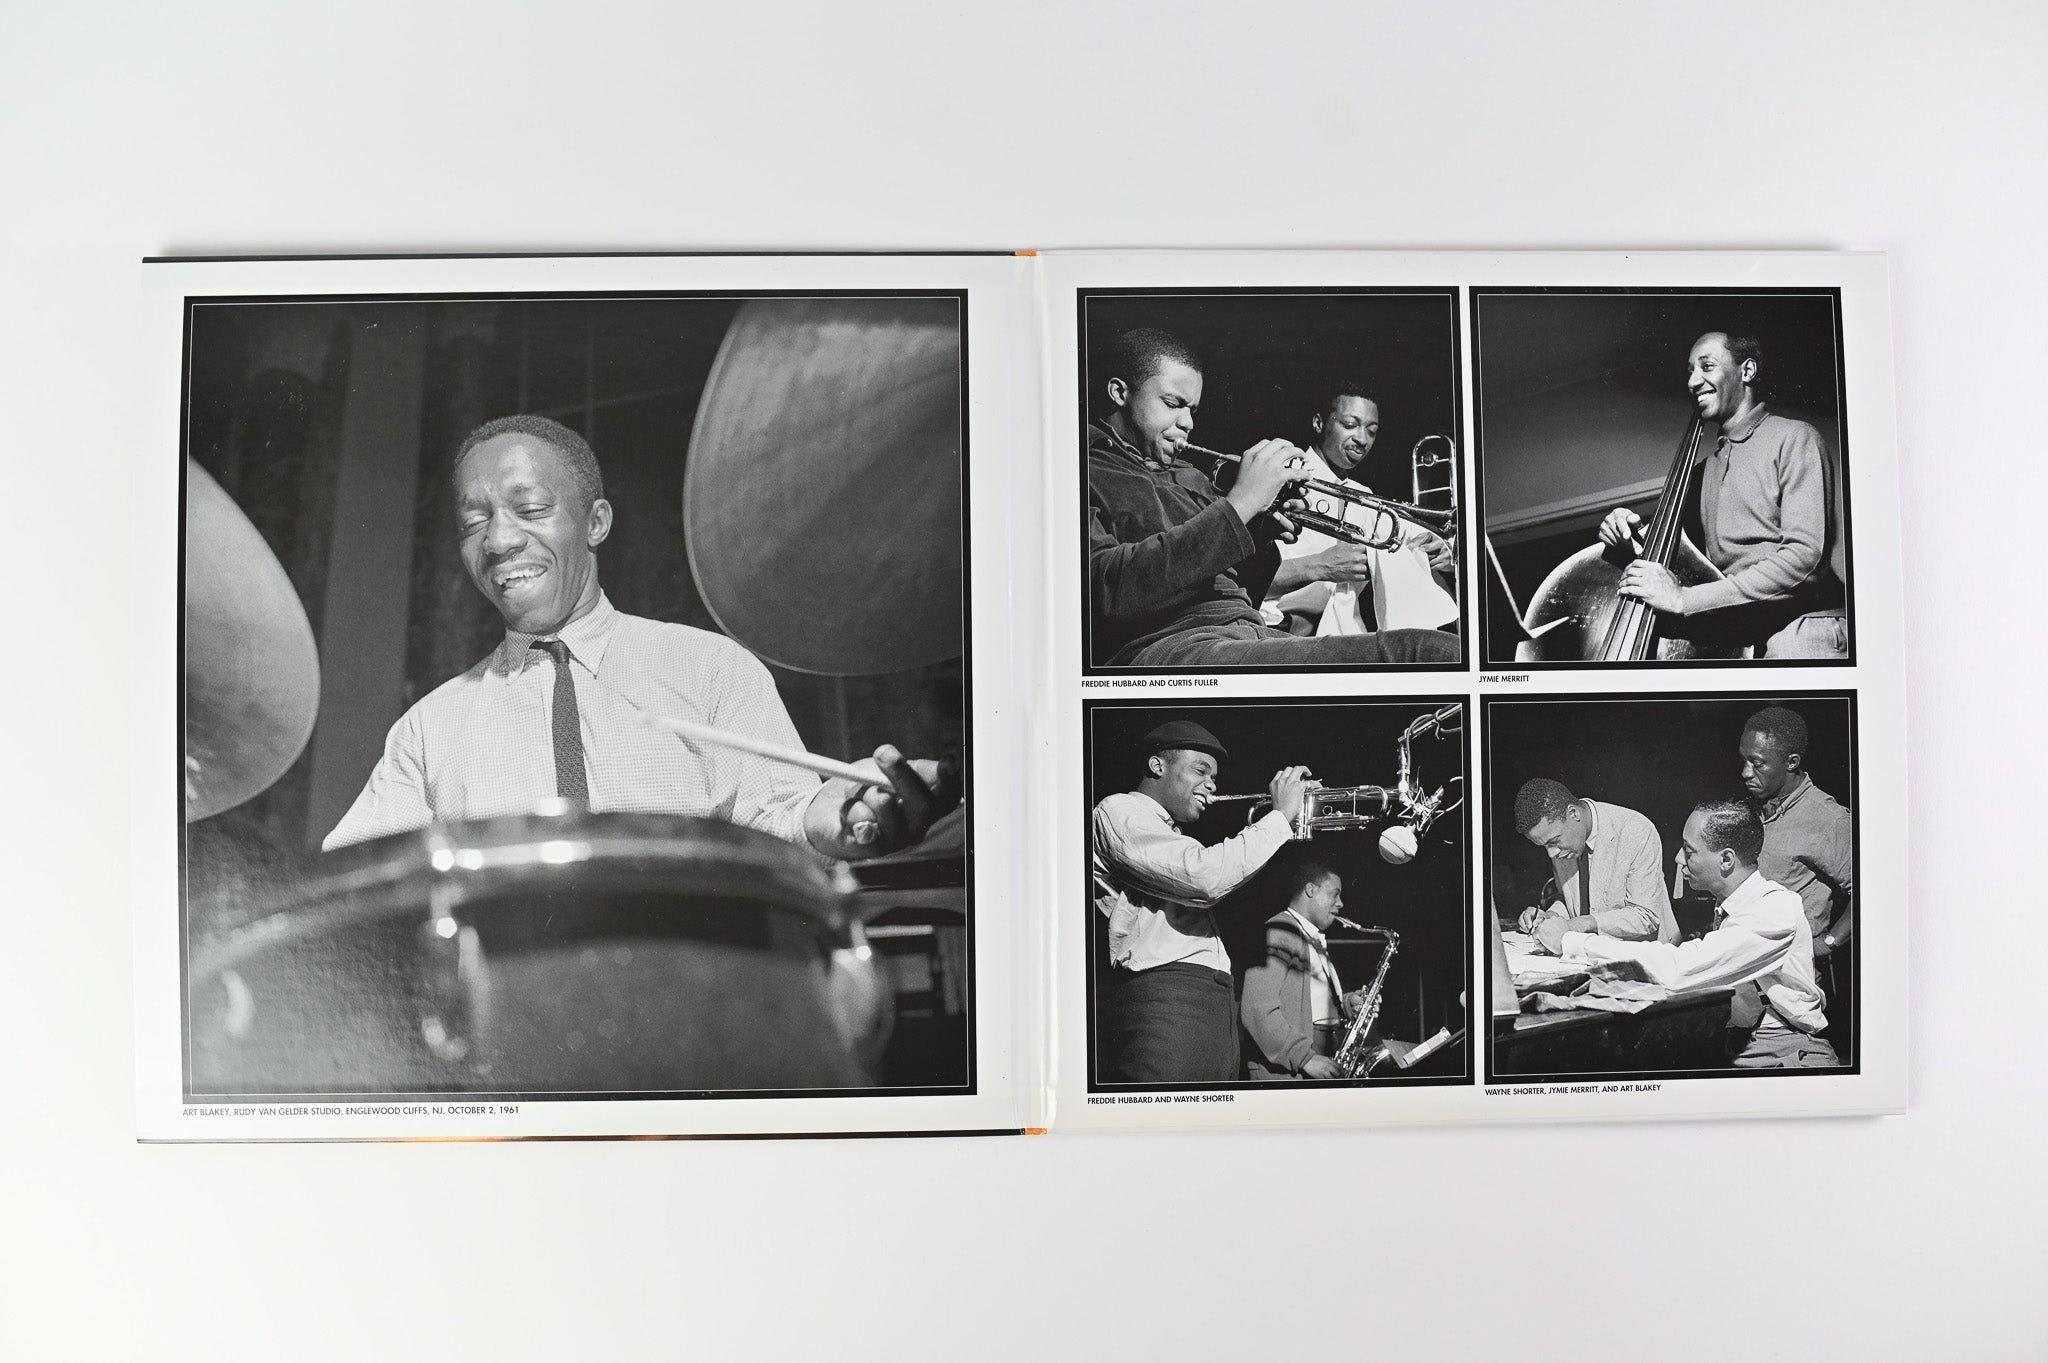 Art Blakey & The Jazz Messengers - Mosaic on Blue Note Music Matters Ltd 45 RPM Reissue